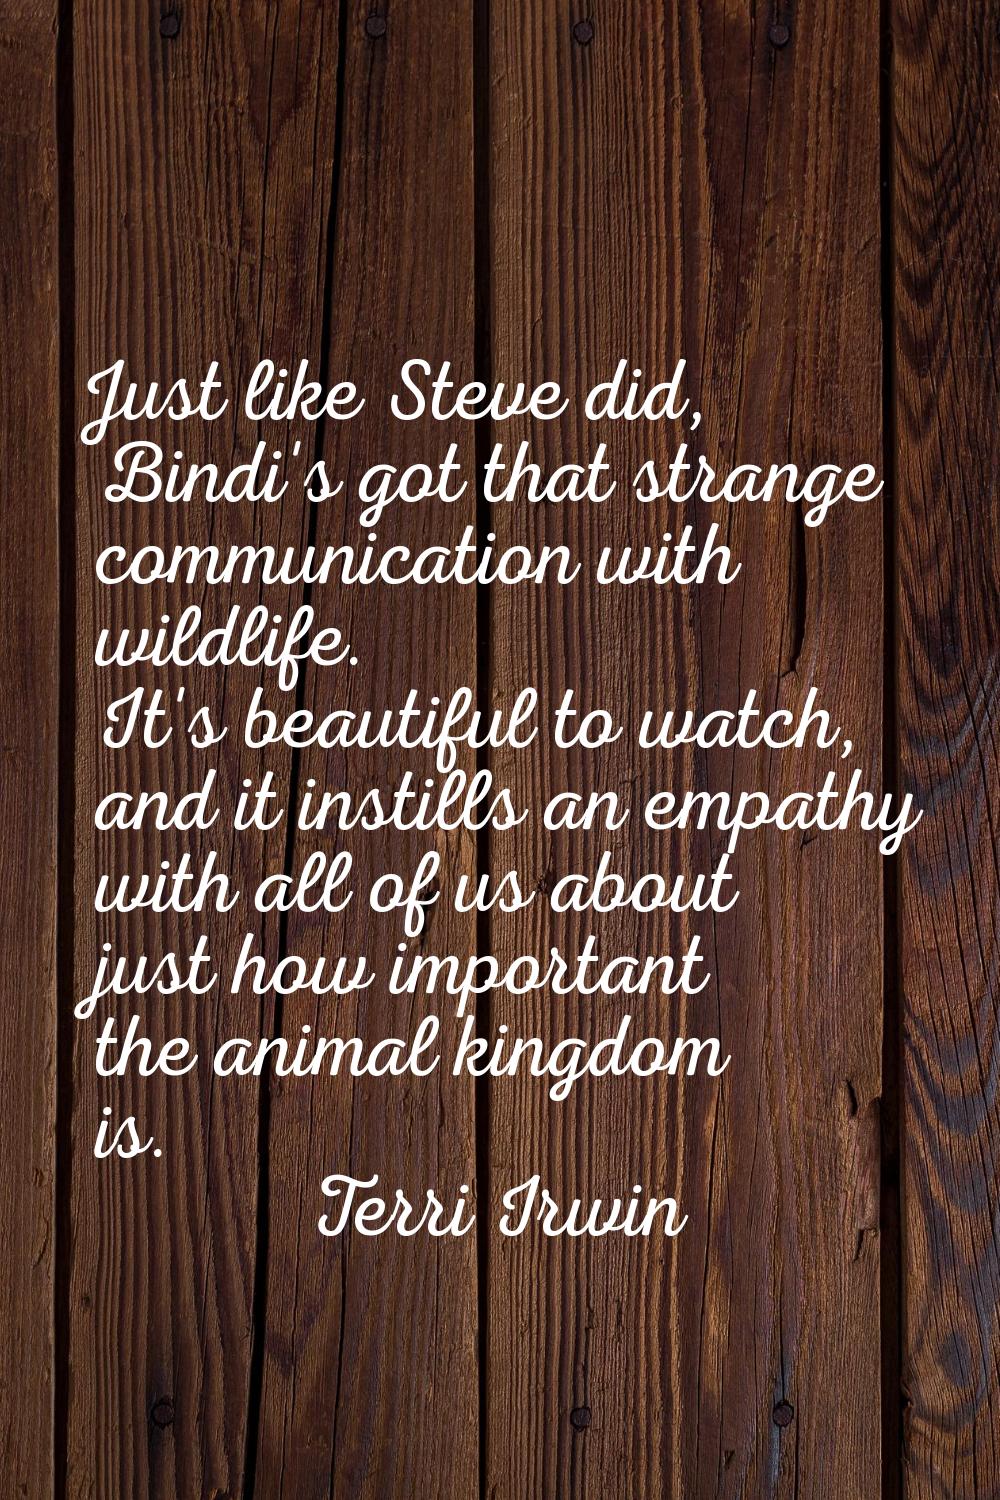 Just like Steve did, Bindi's got that strange communication with wildlife. It's beautiful to watch,